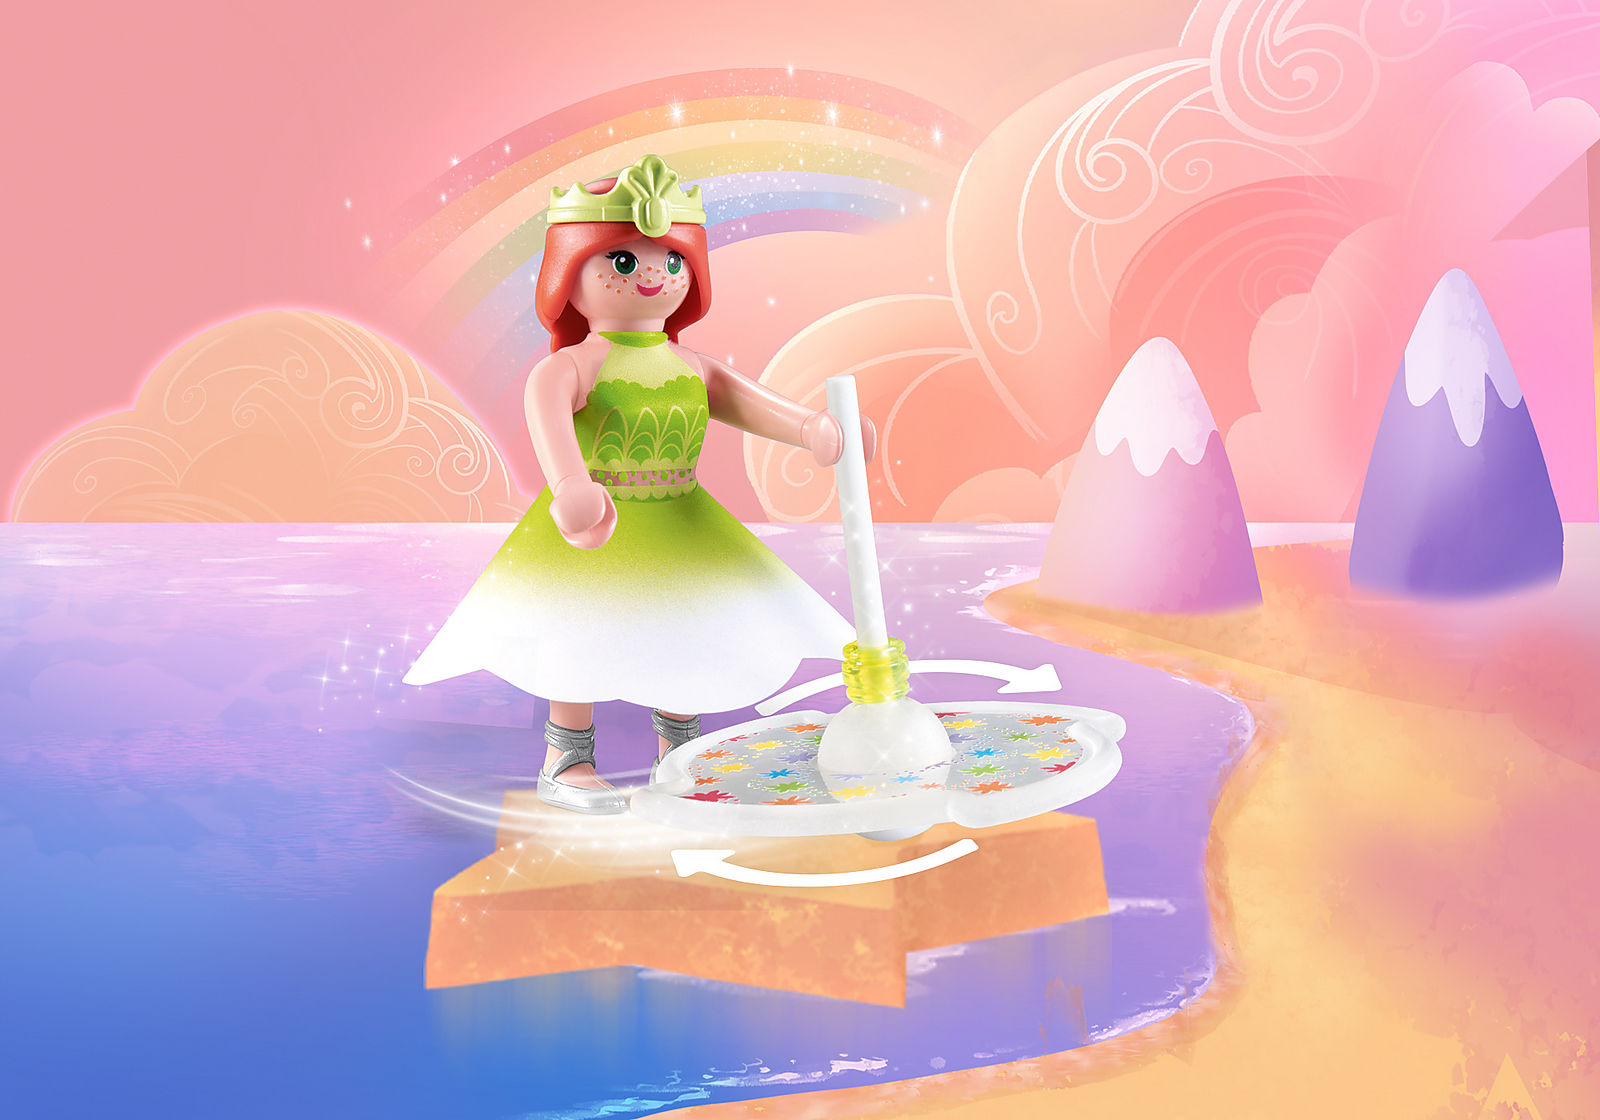 Playmobil Princess Magic: Peonza Arcoiris con Princesa 71364